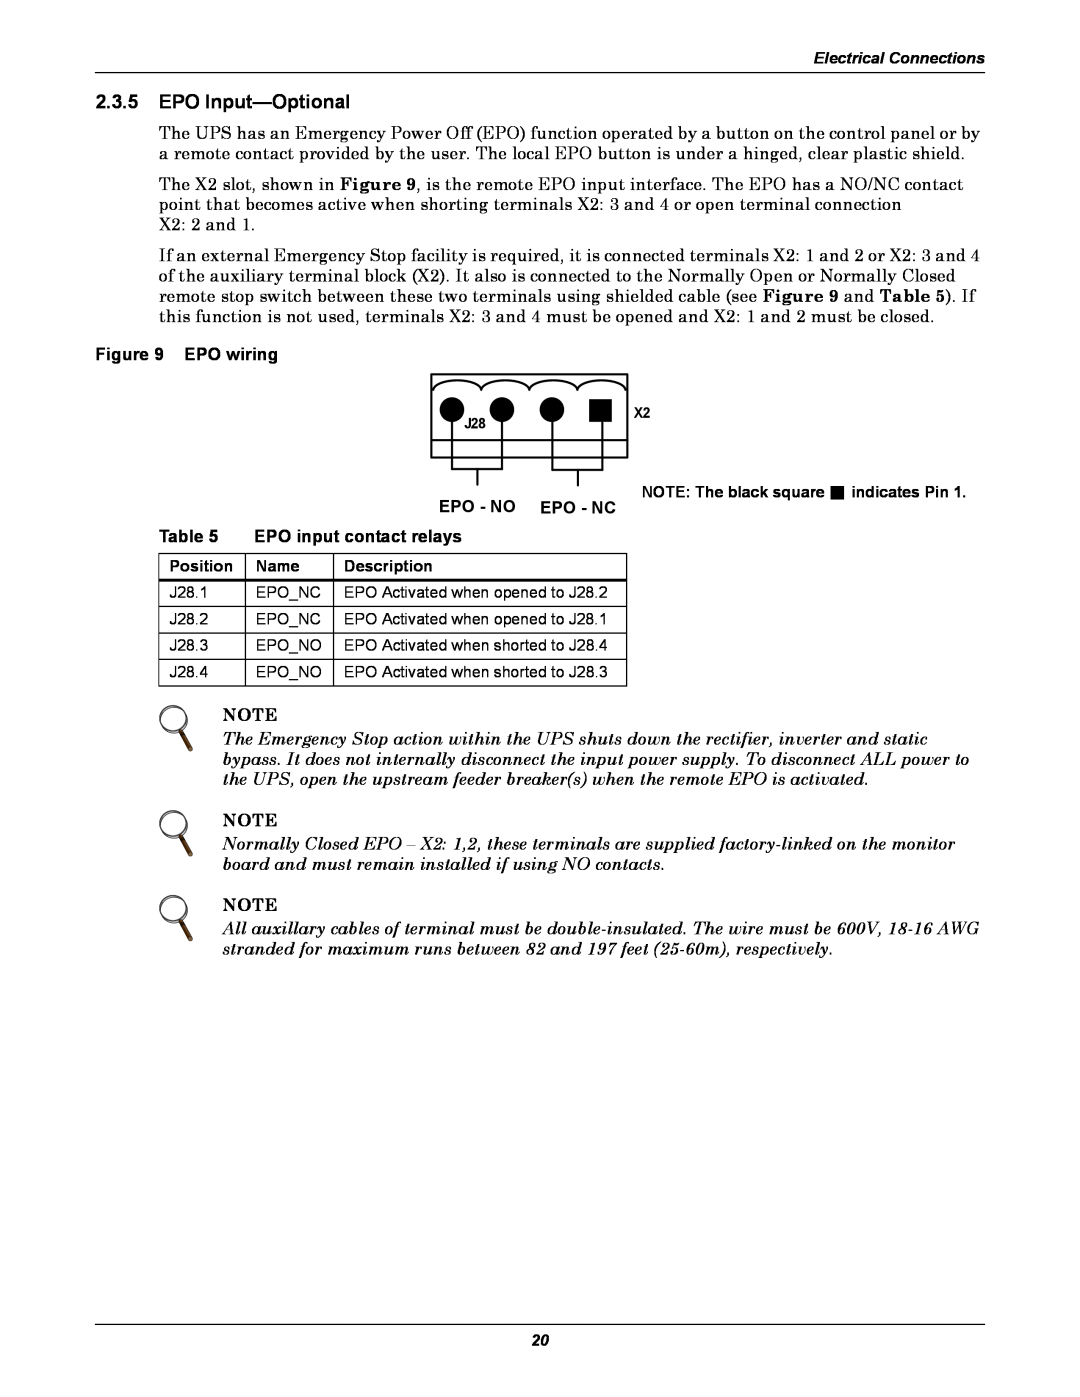 Emerson 60HZ, 480V user manual 2.3.5EPO Input—Optional, EPO wiring, Epo - No, Epo - Nc, Table, EPO input contact relays 